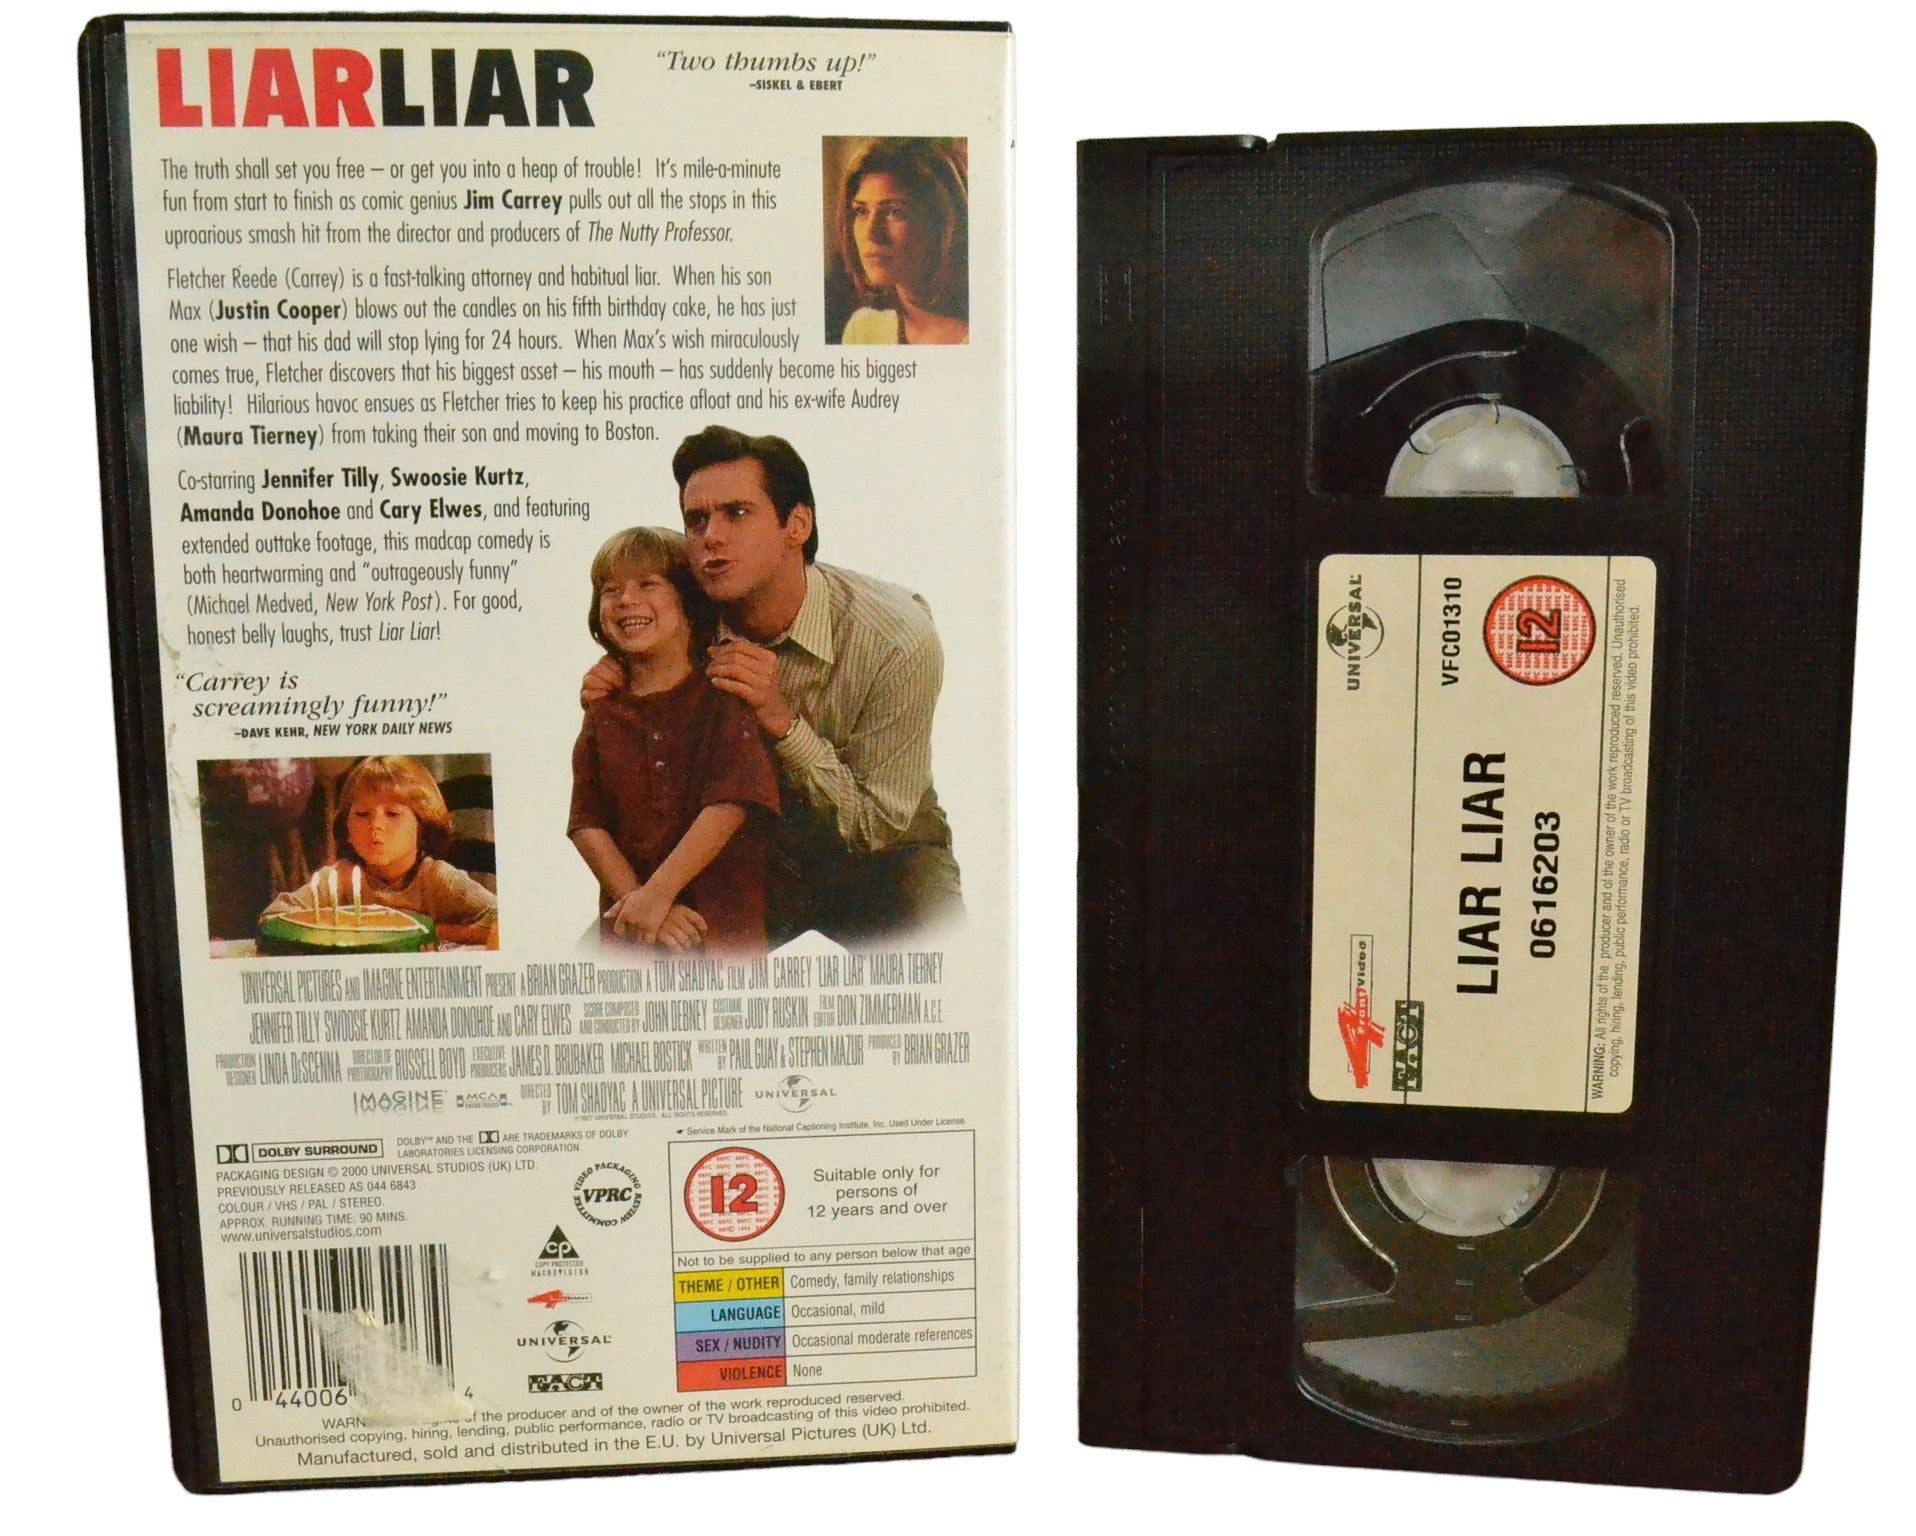 Liarliar (Jim Carrey) - Jim Carrey - Universal - VFC01310 - Comedy - Pal - VHS-